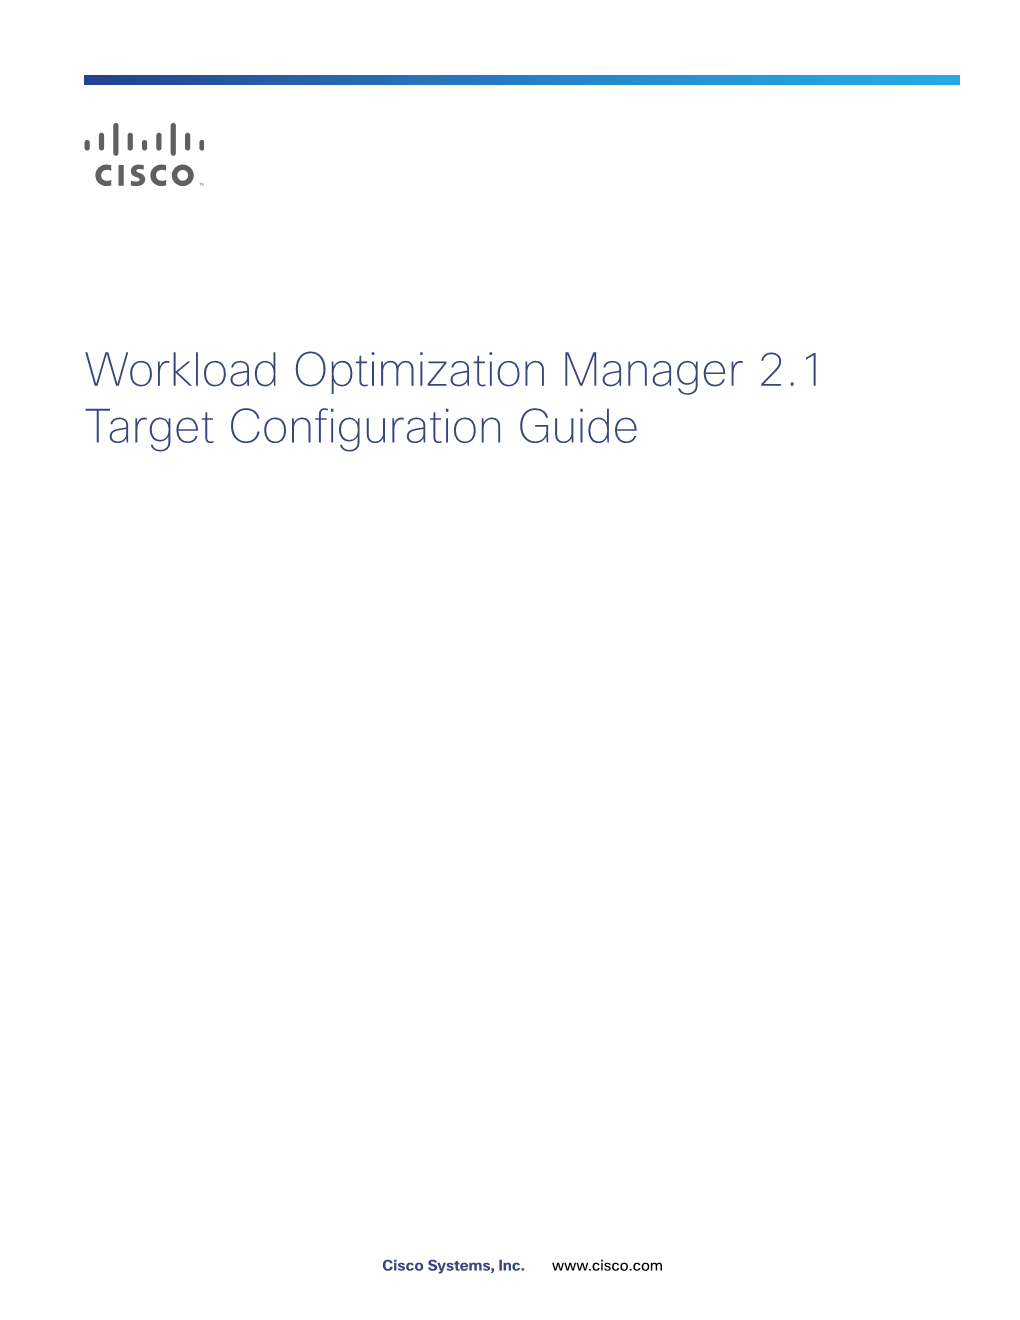 Workload Optimization Manager 2.1 Target Configuration Guide